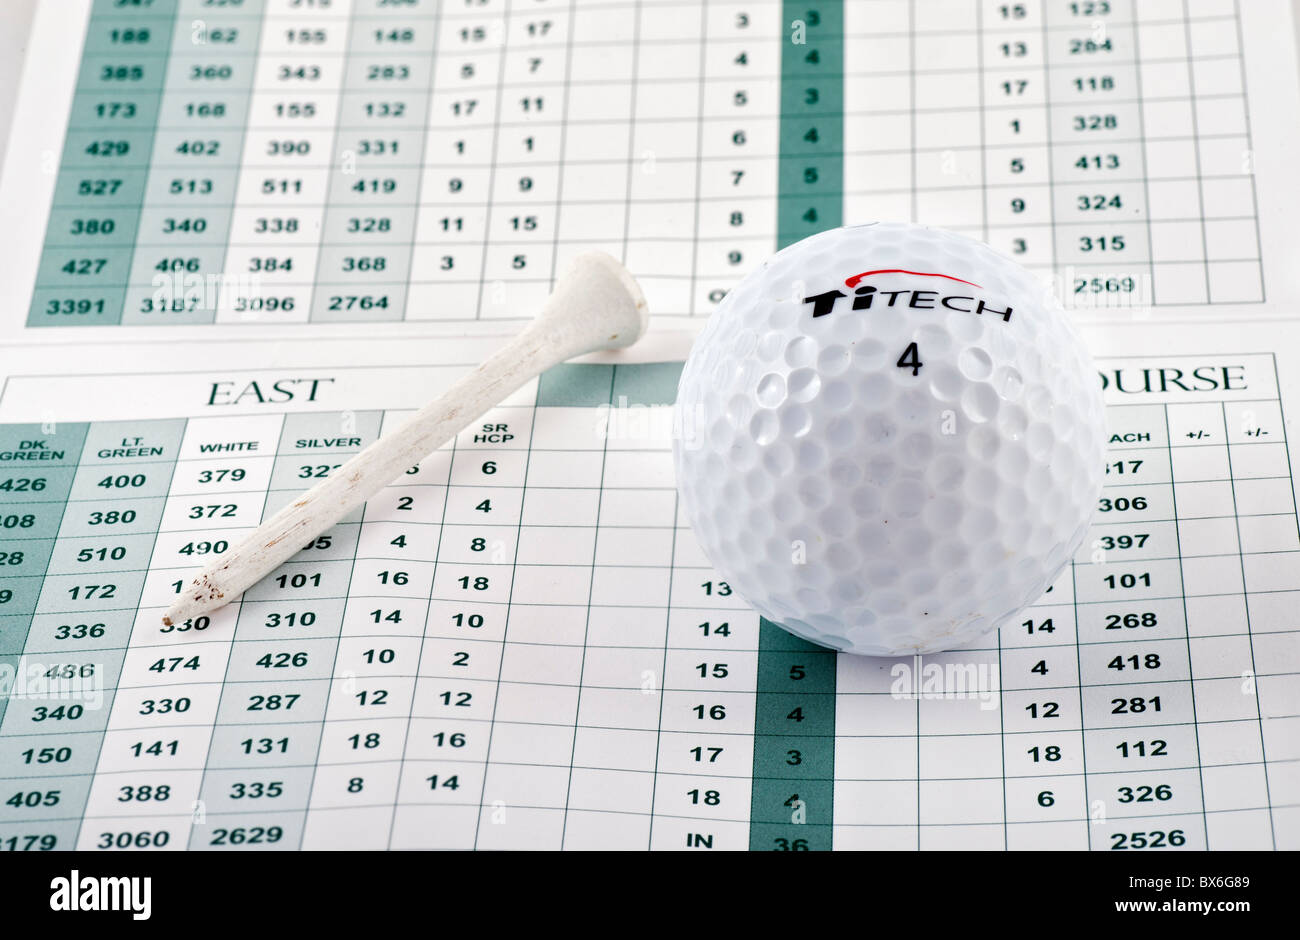 Balle de golf, tee et Score Card, Florida, USA Banque D'Images